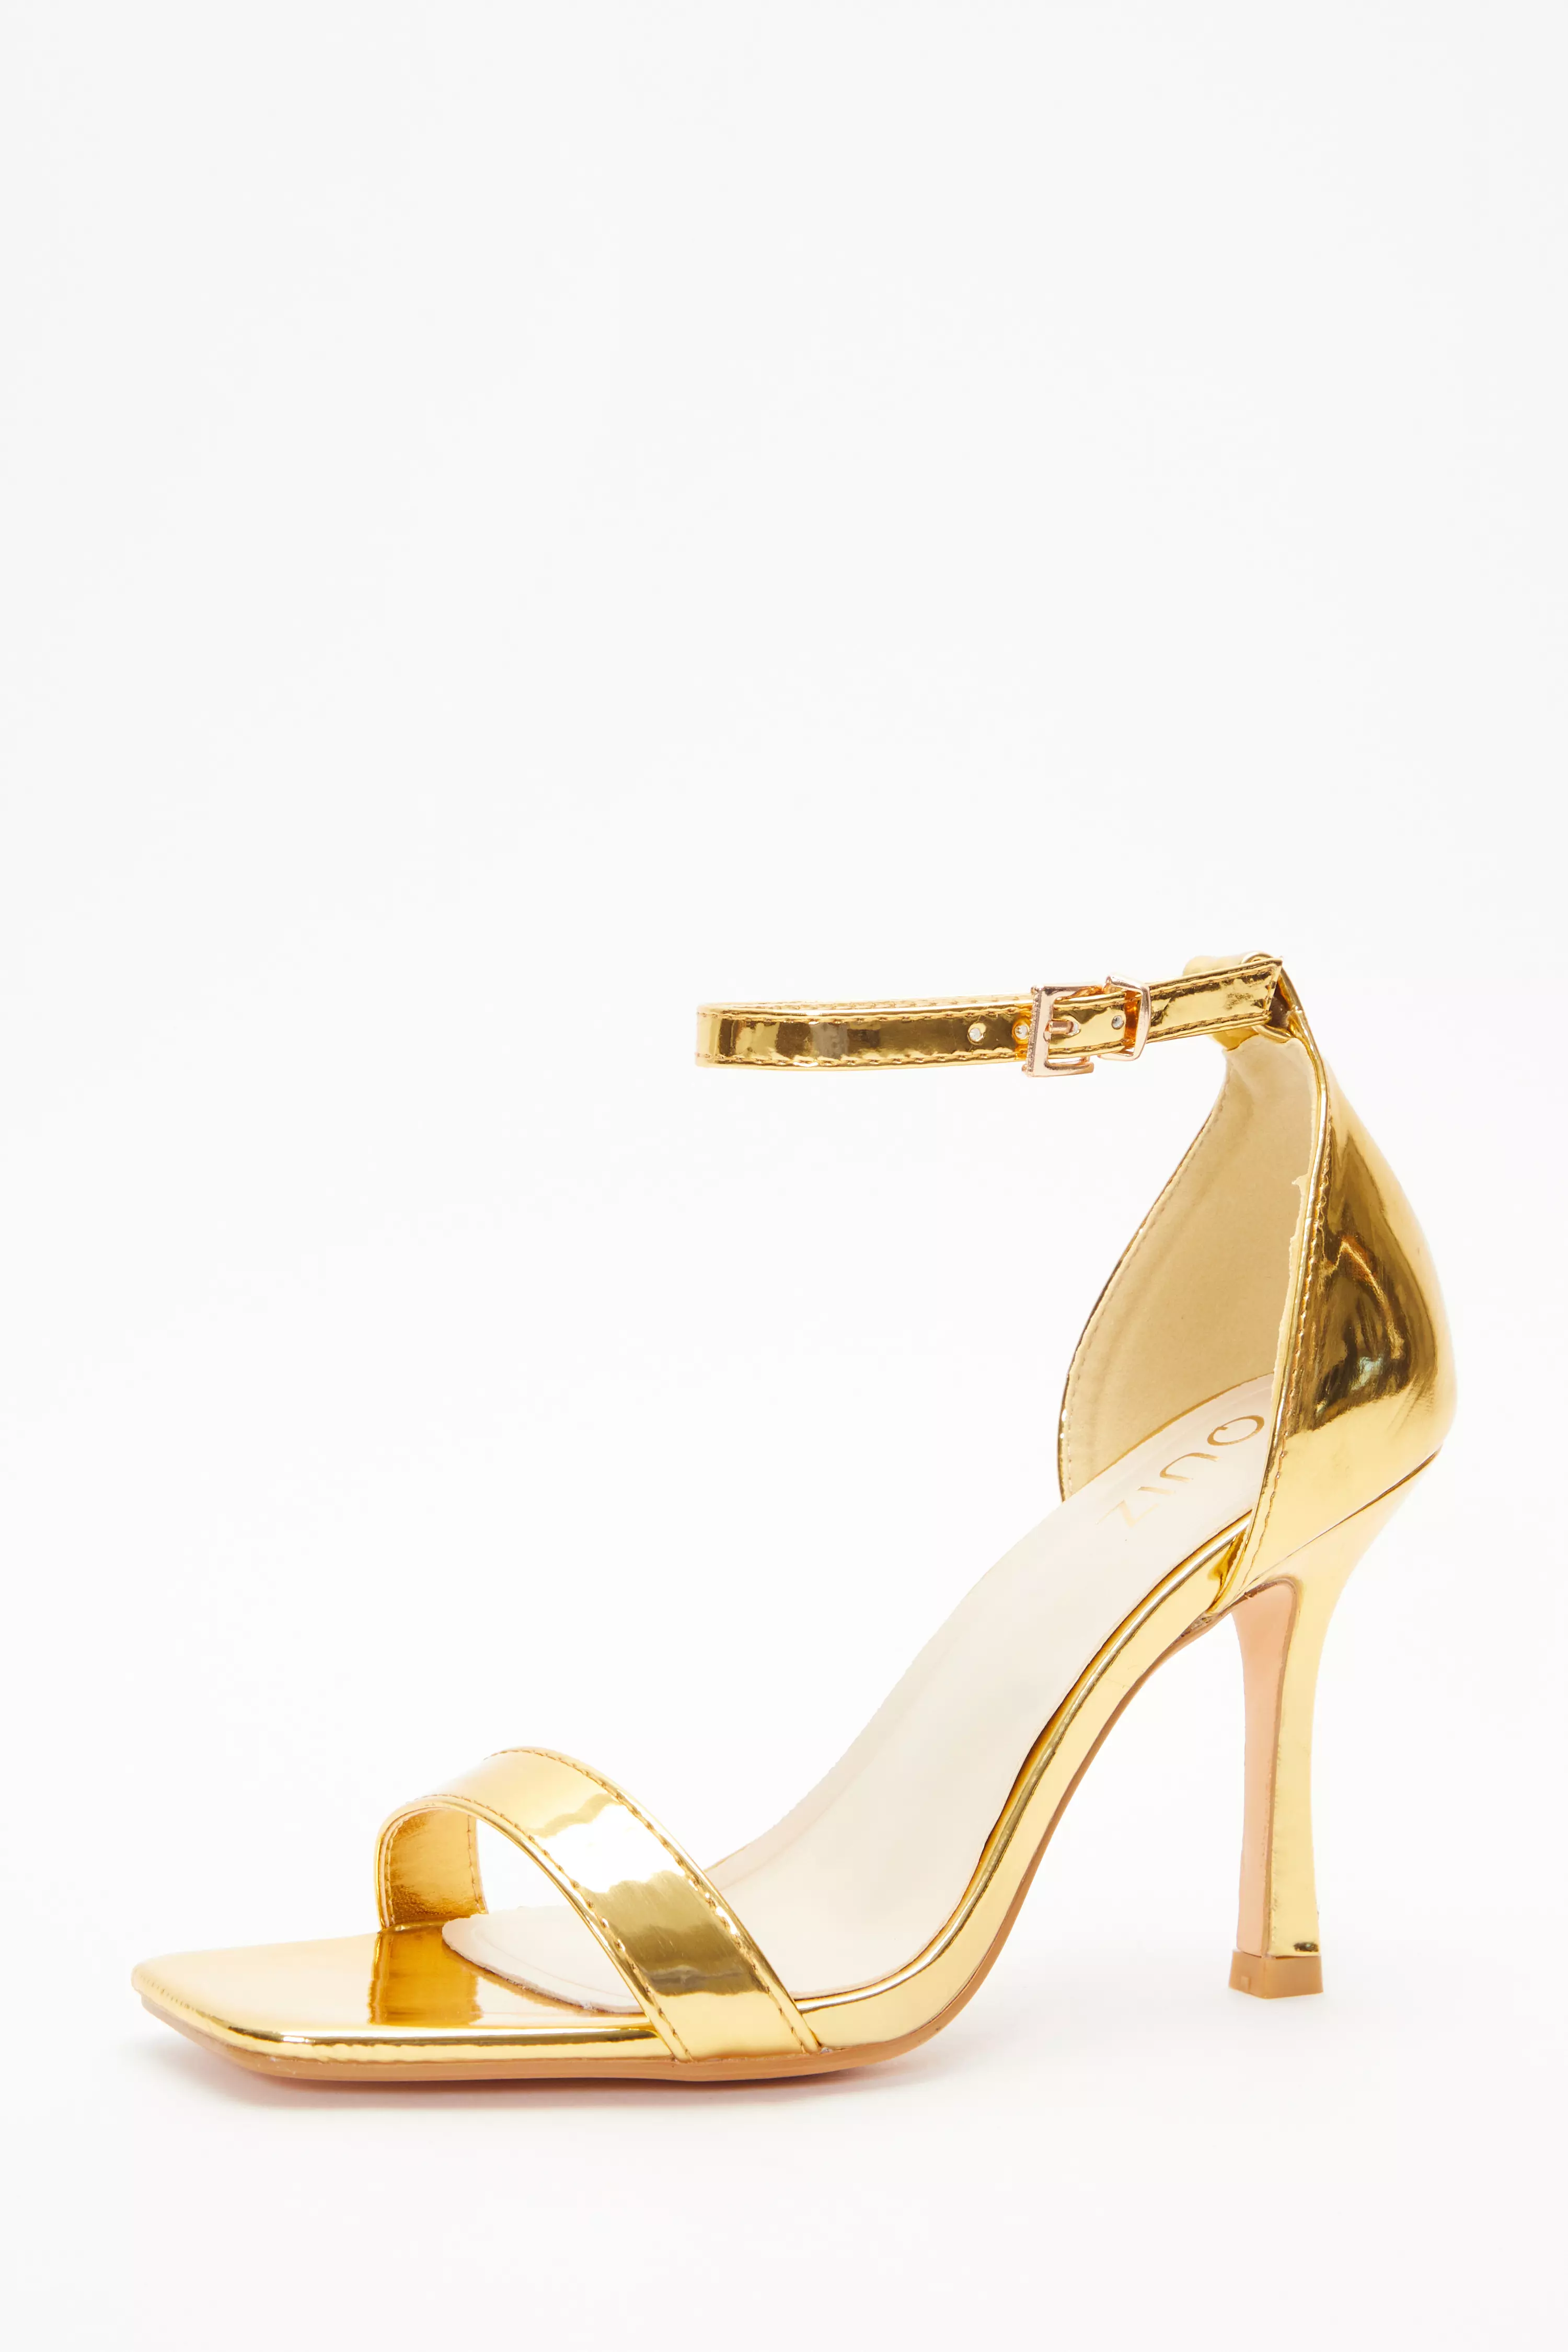 Gold Foil Heeled Sandals - QUIZ Clothing